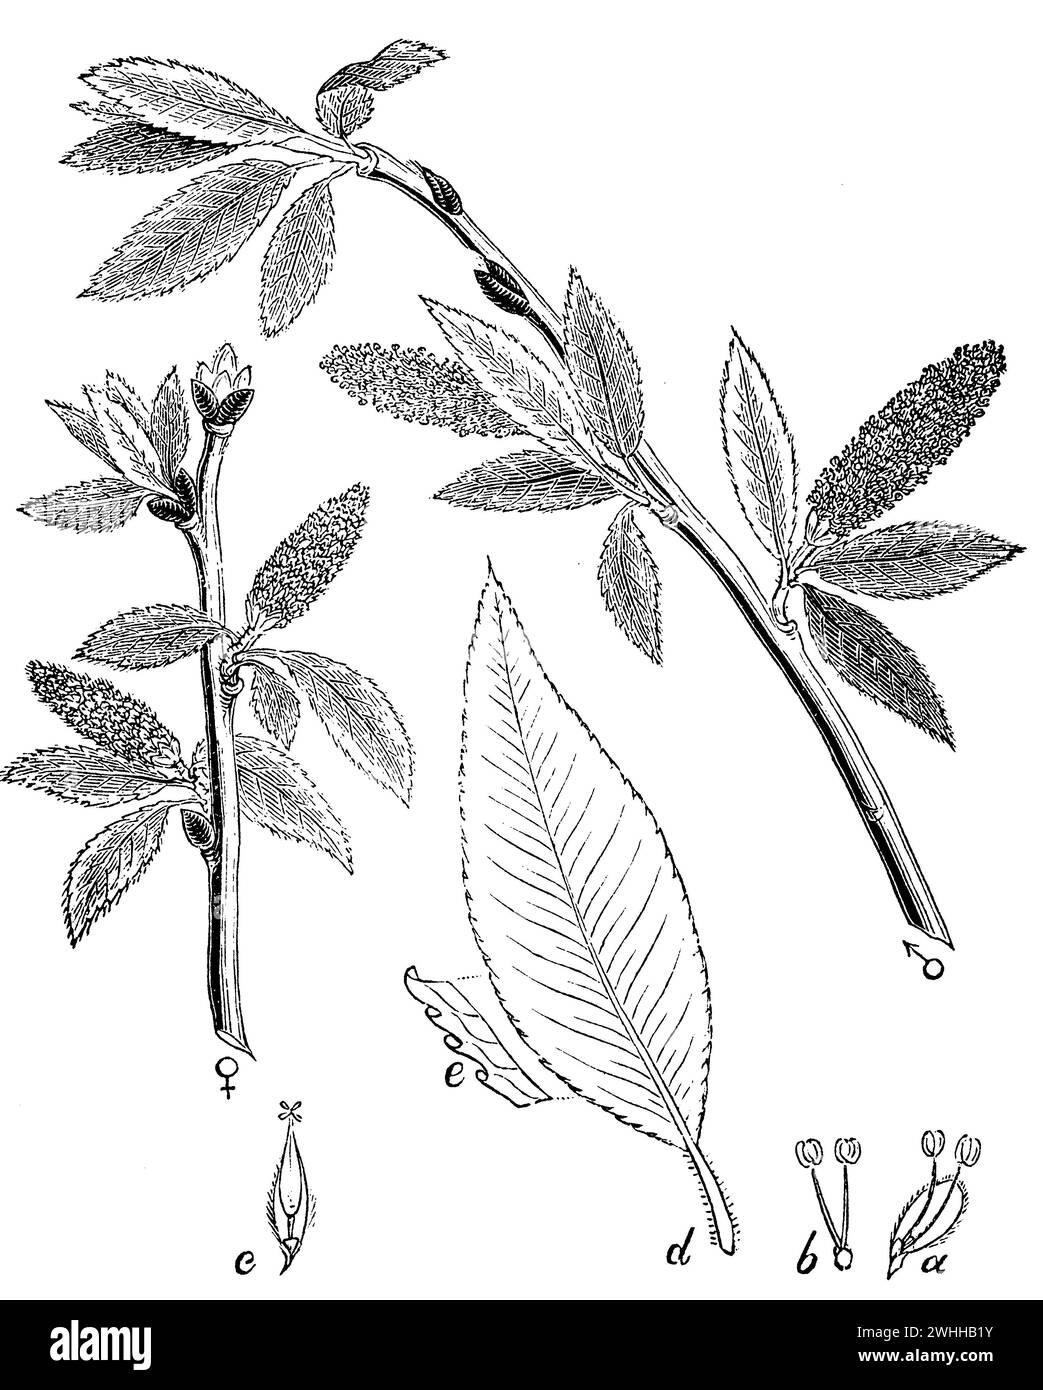 Salix fragilis, Salix fragilis, anonym (biology book, 1881), Bruch-Weide, Saule fragile Stock Photo